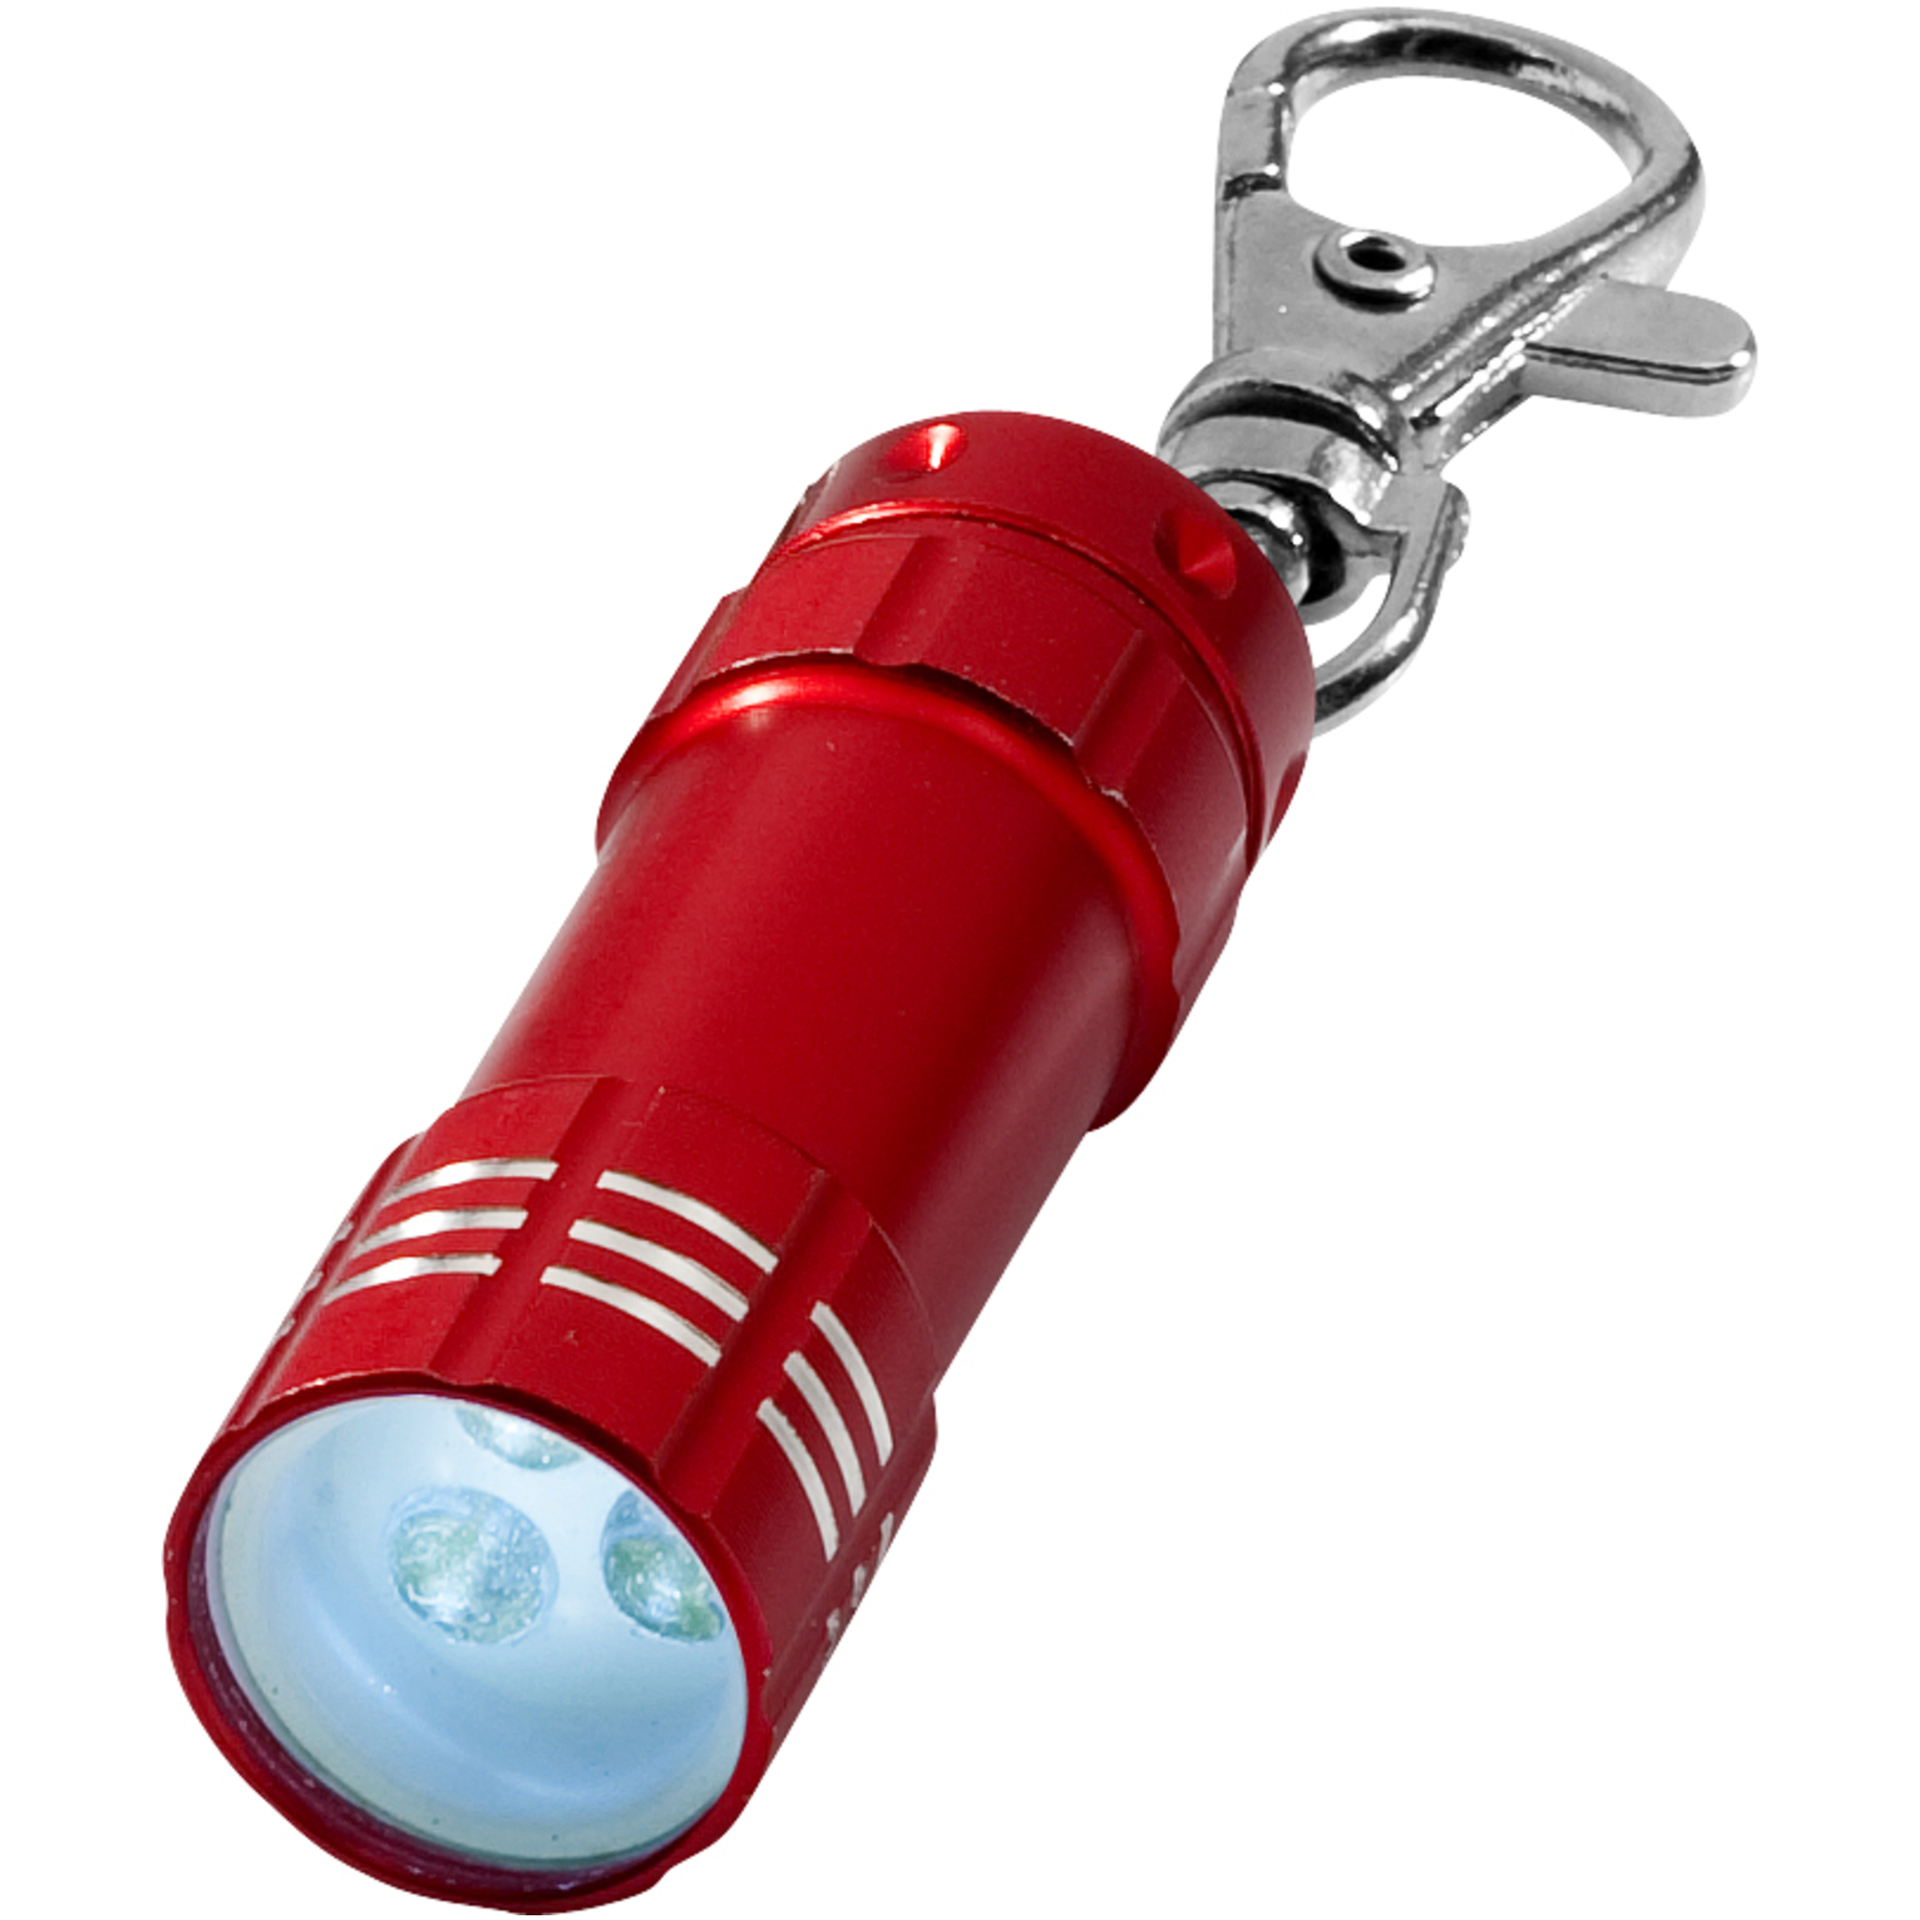 Keylight in red